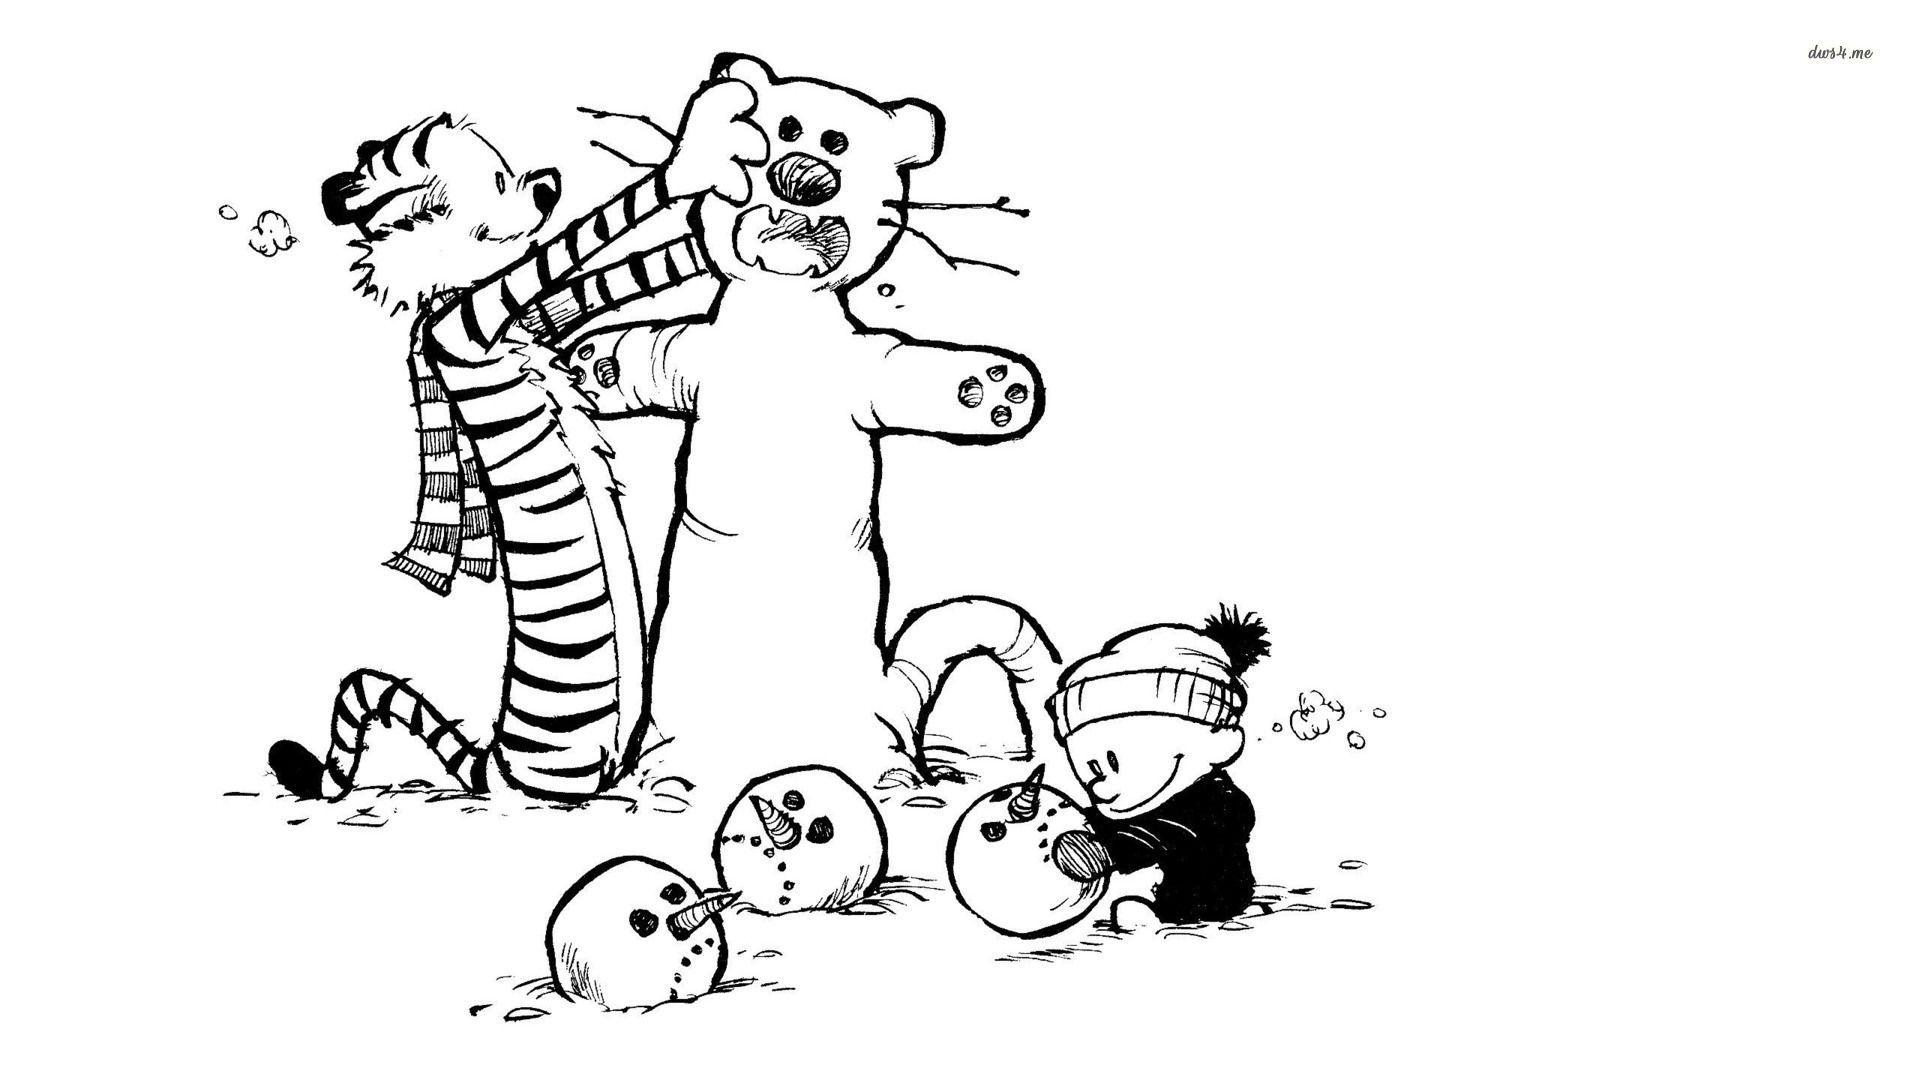 Calvin and Hobbes wallpaper - Comic wallpapers - #23642